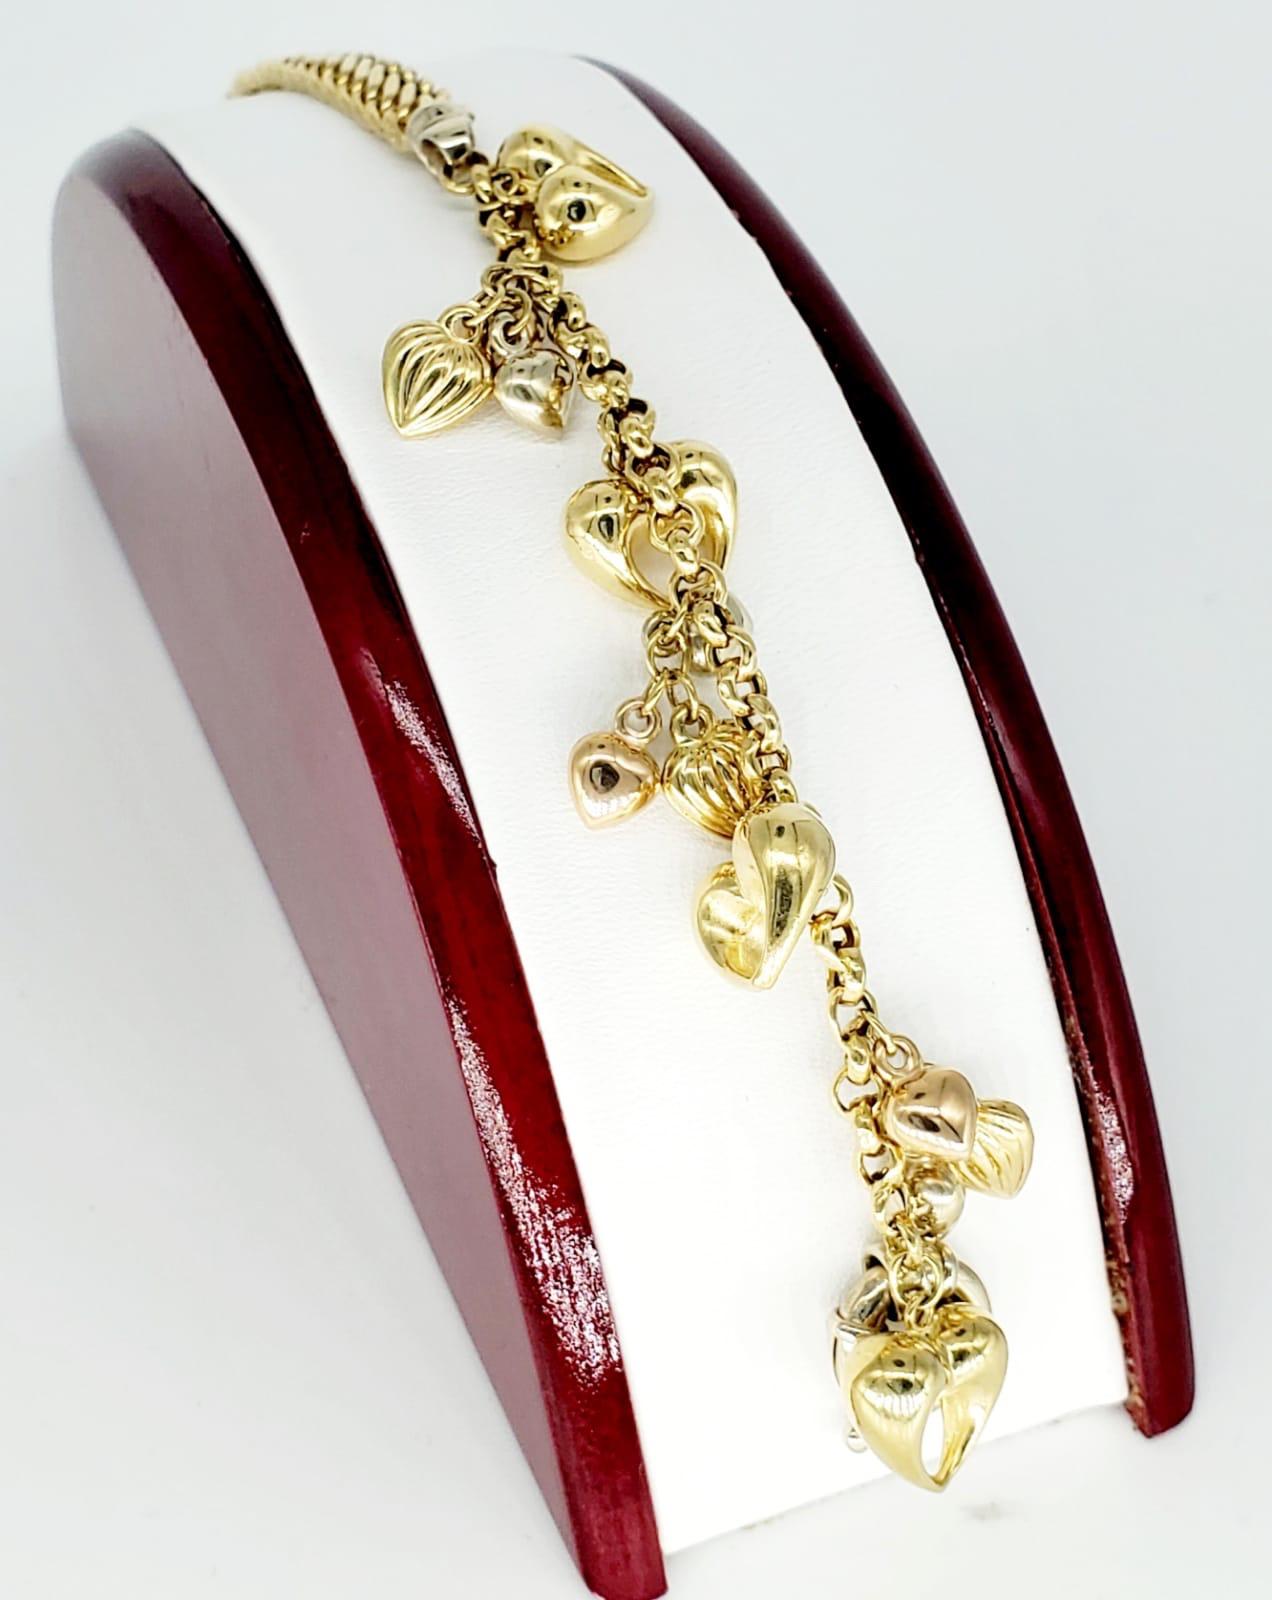 18k gold charms for bracelets